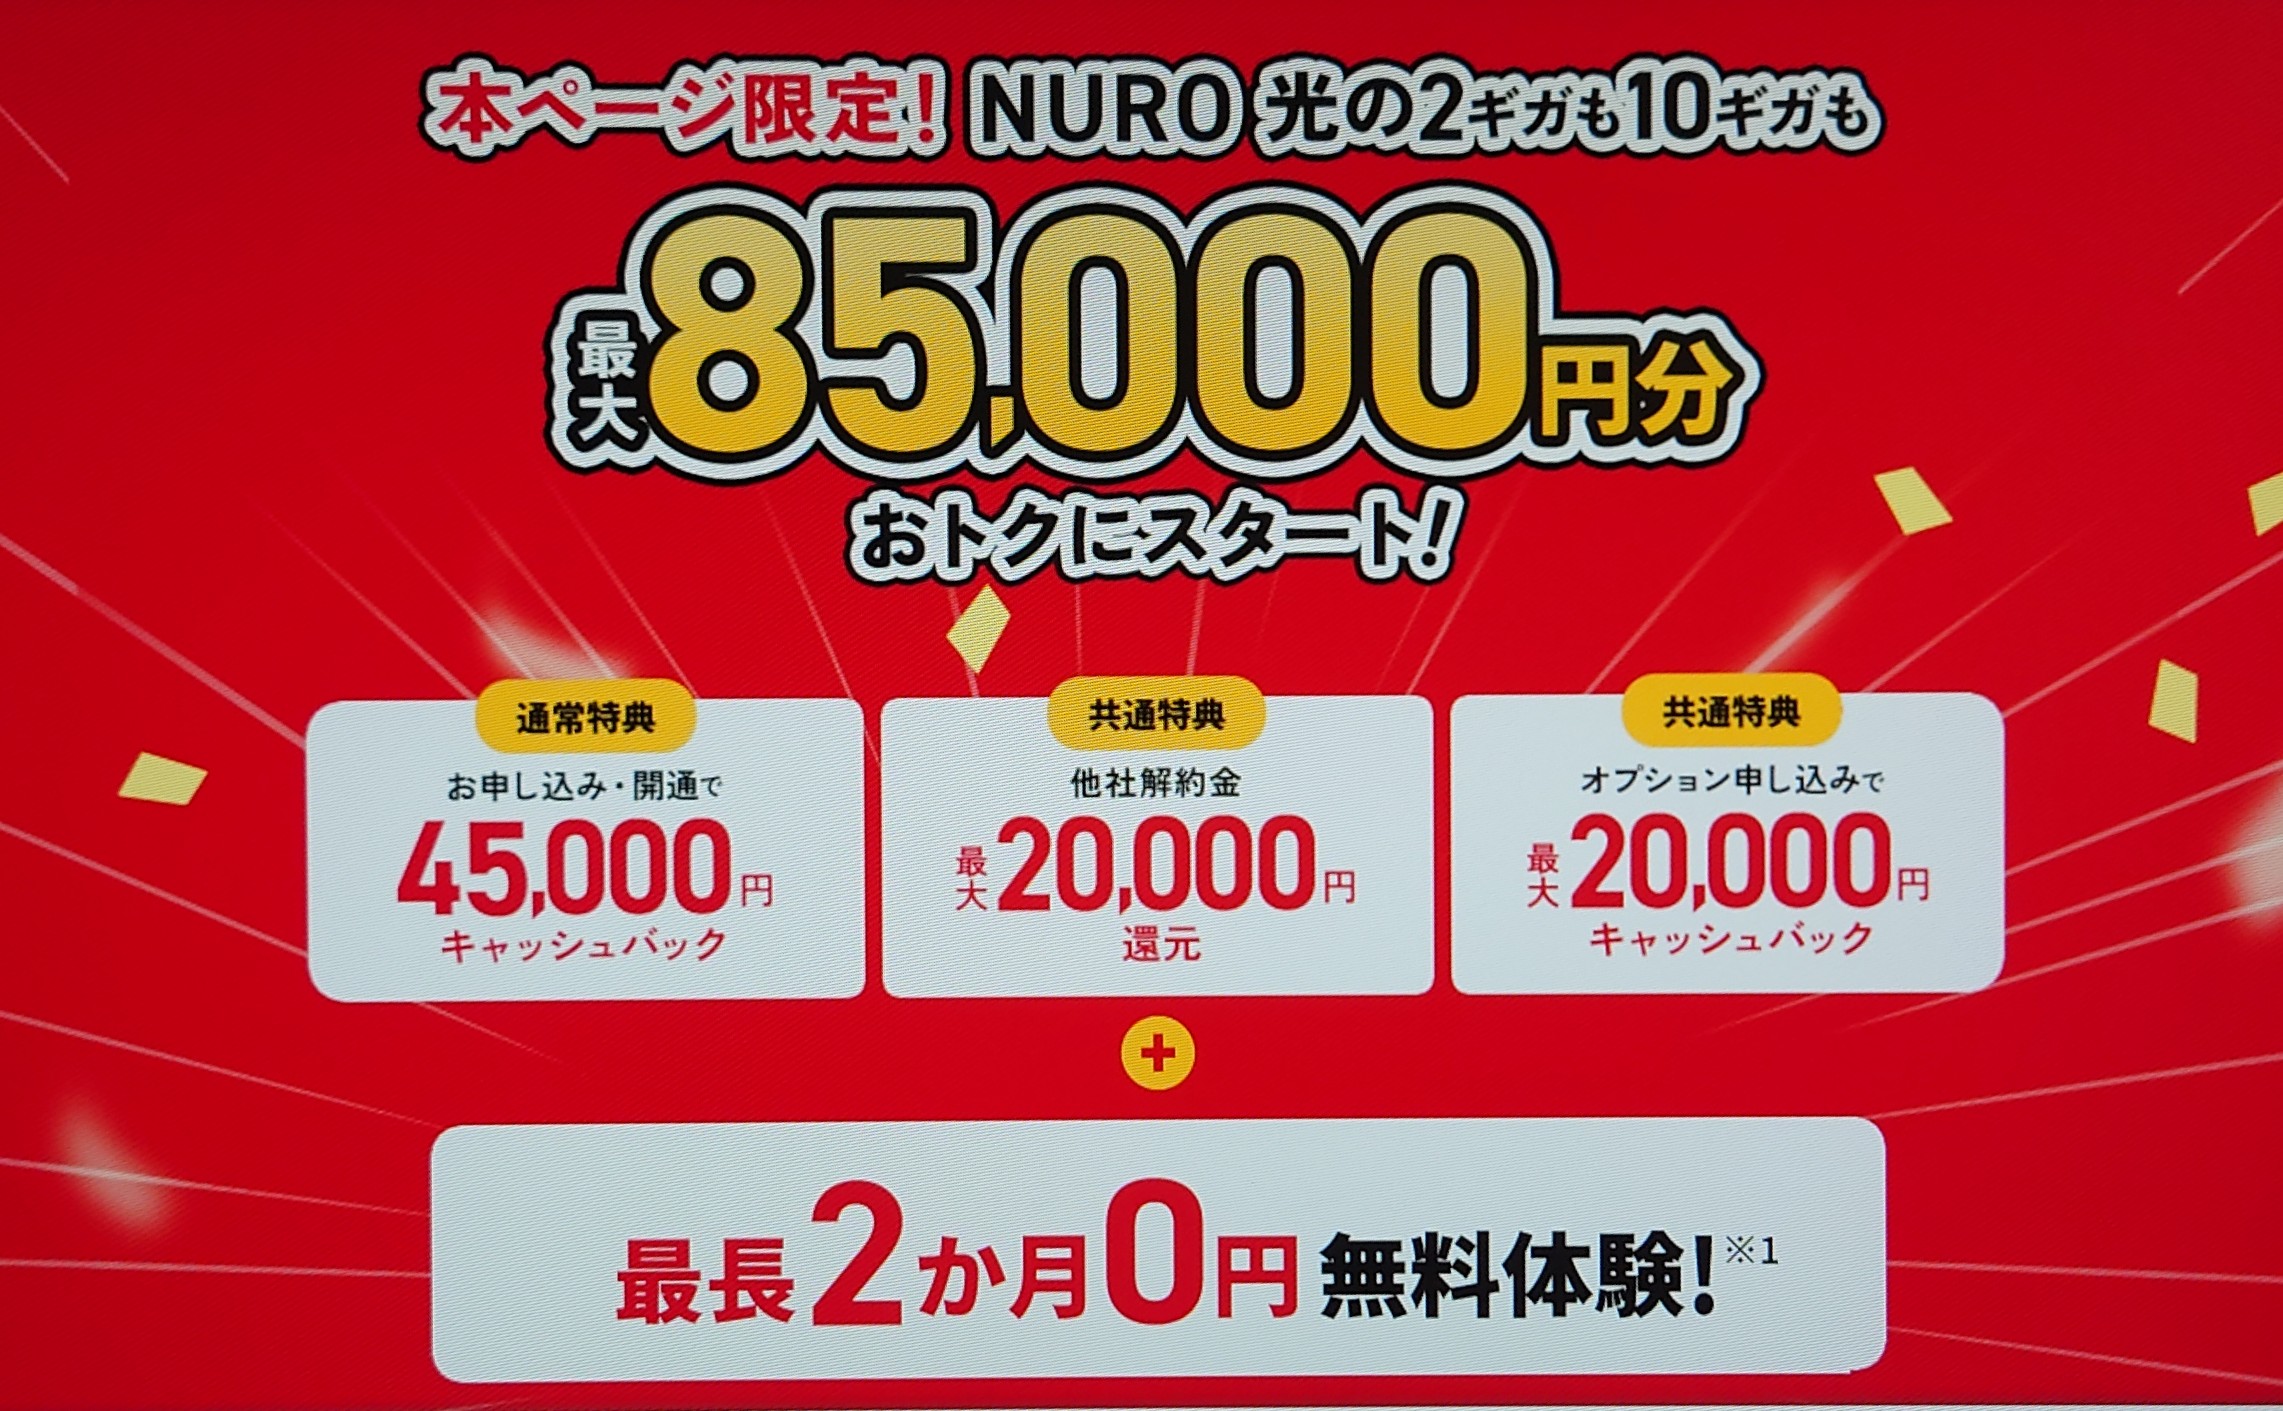 NURO光特設サイト